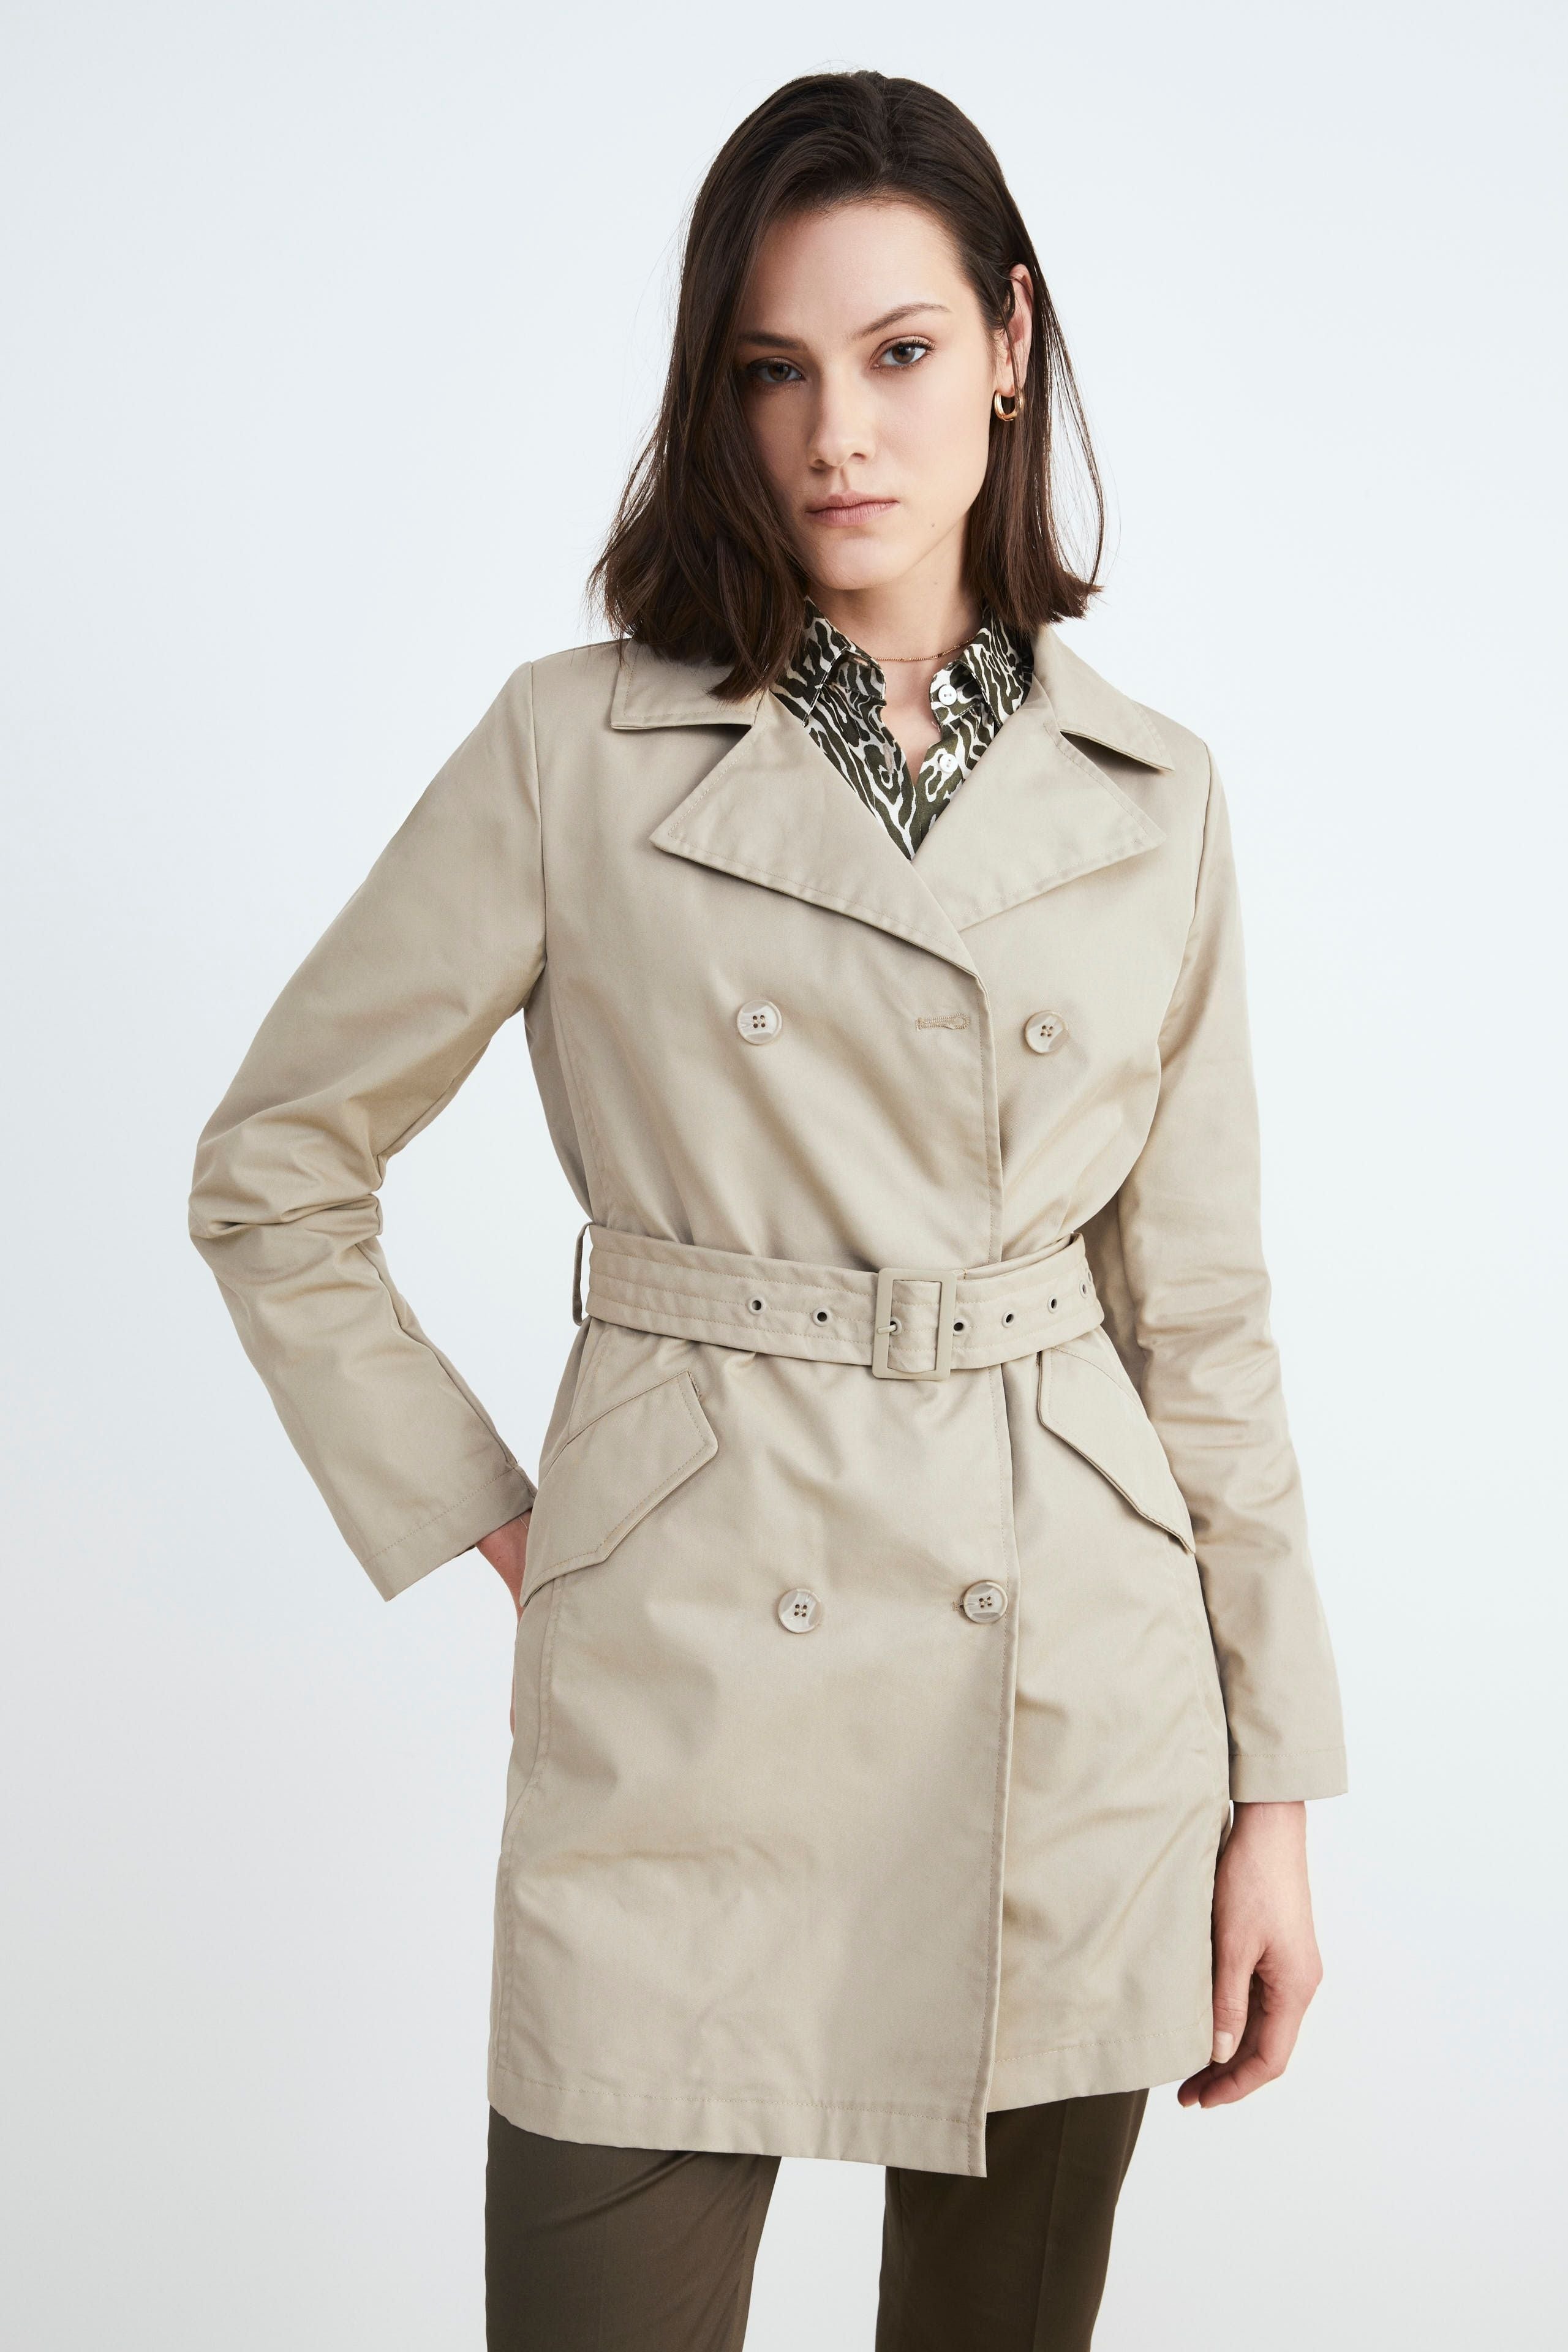 Elegant women’s trench coat - Sand brown